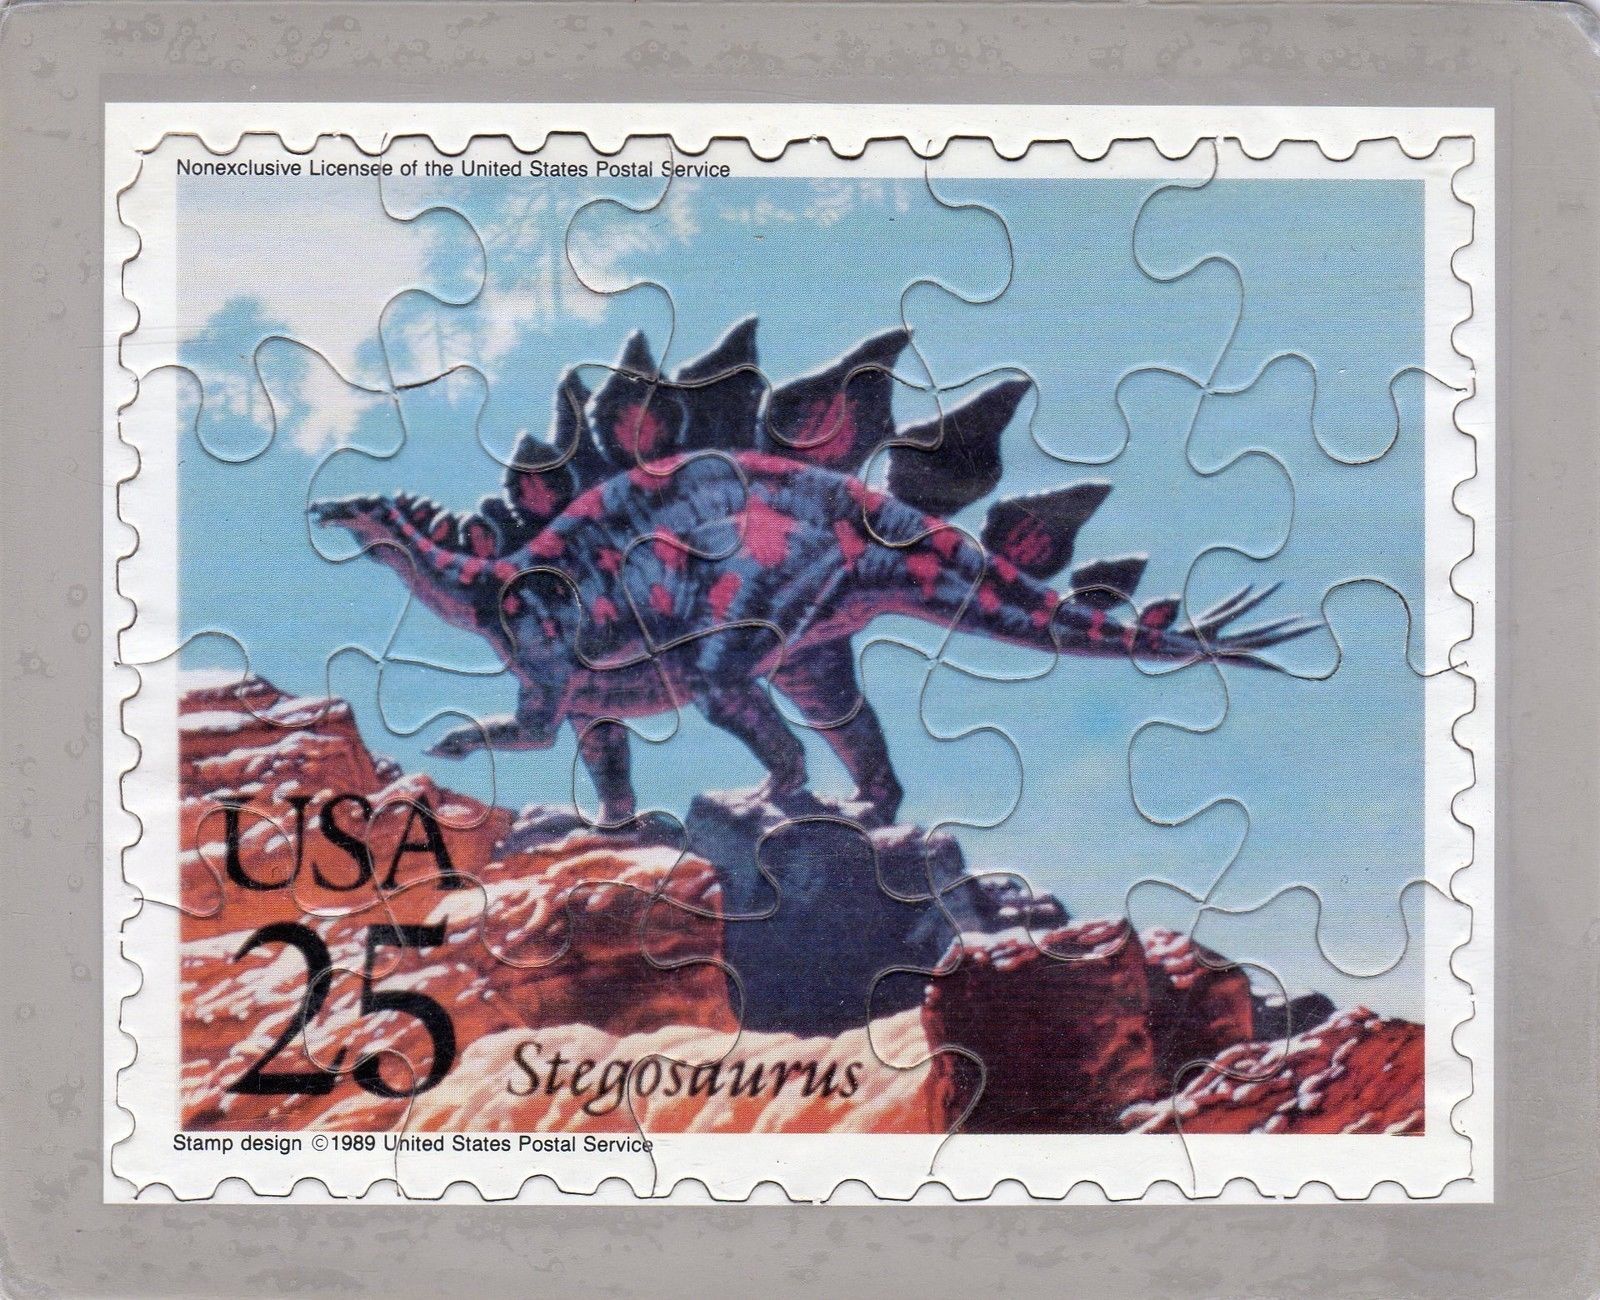 Primary image for USPS POSTCARD - Dinosaurs Commemorative Puzzle series - STEGOSAURUS